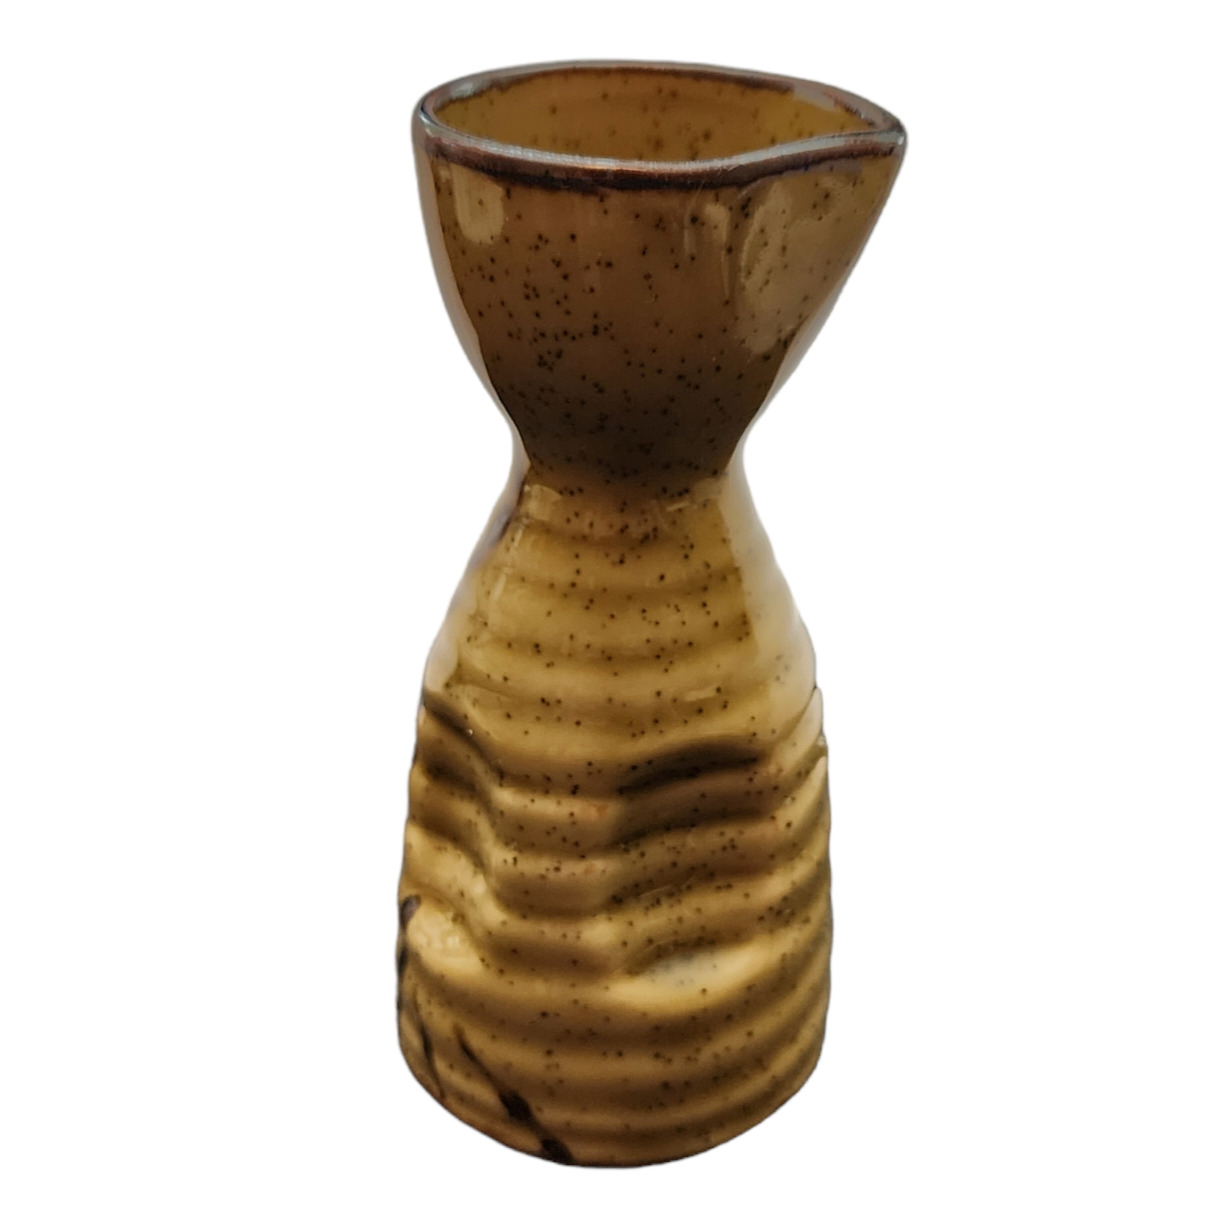 Vintage Japanese Sake Bottle 4.5”T 2”W Brown Ceramic Hand Thrown Bud Vase